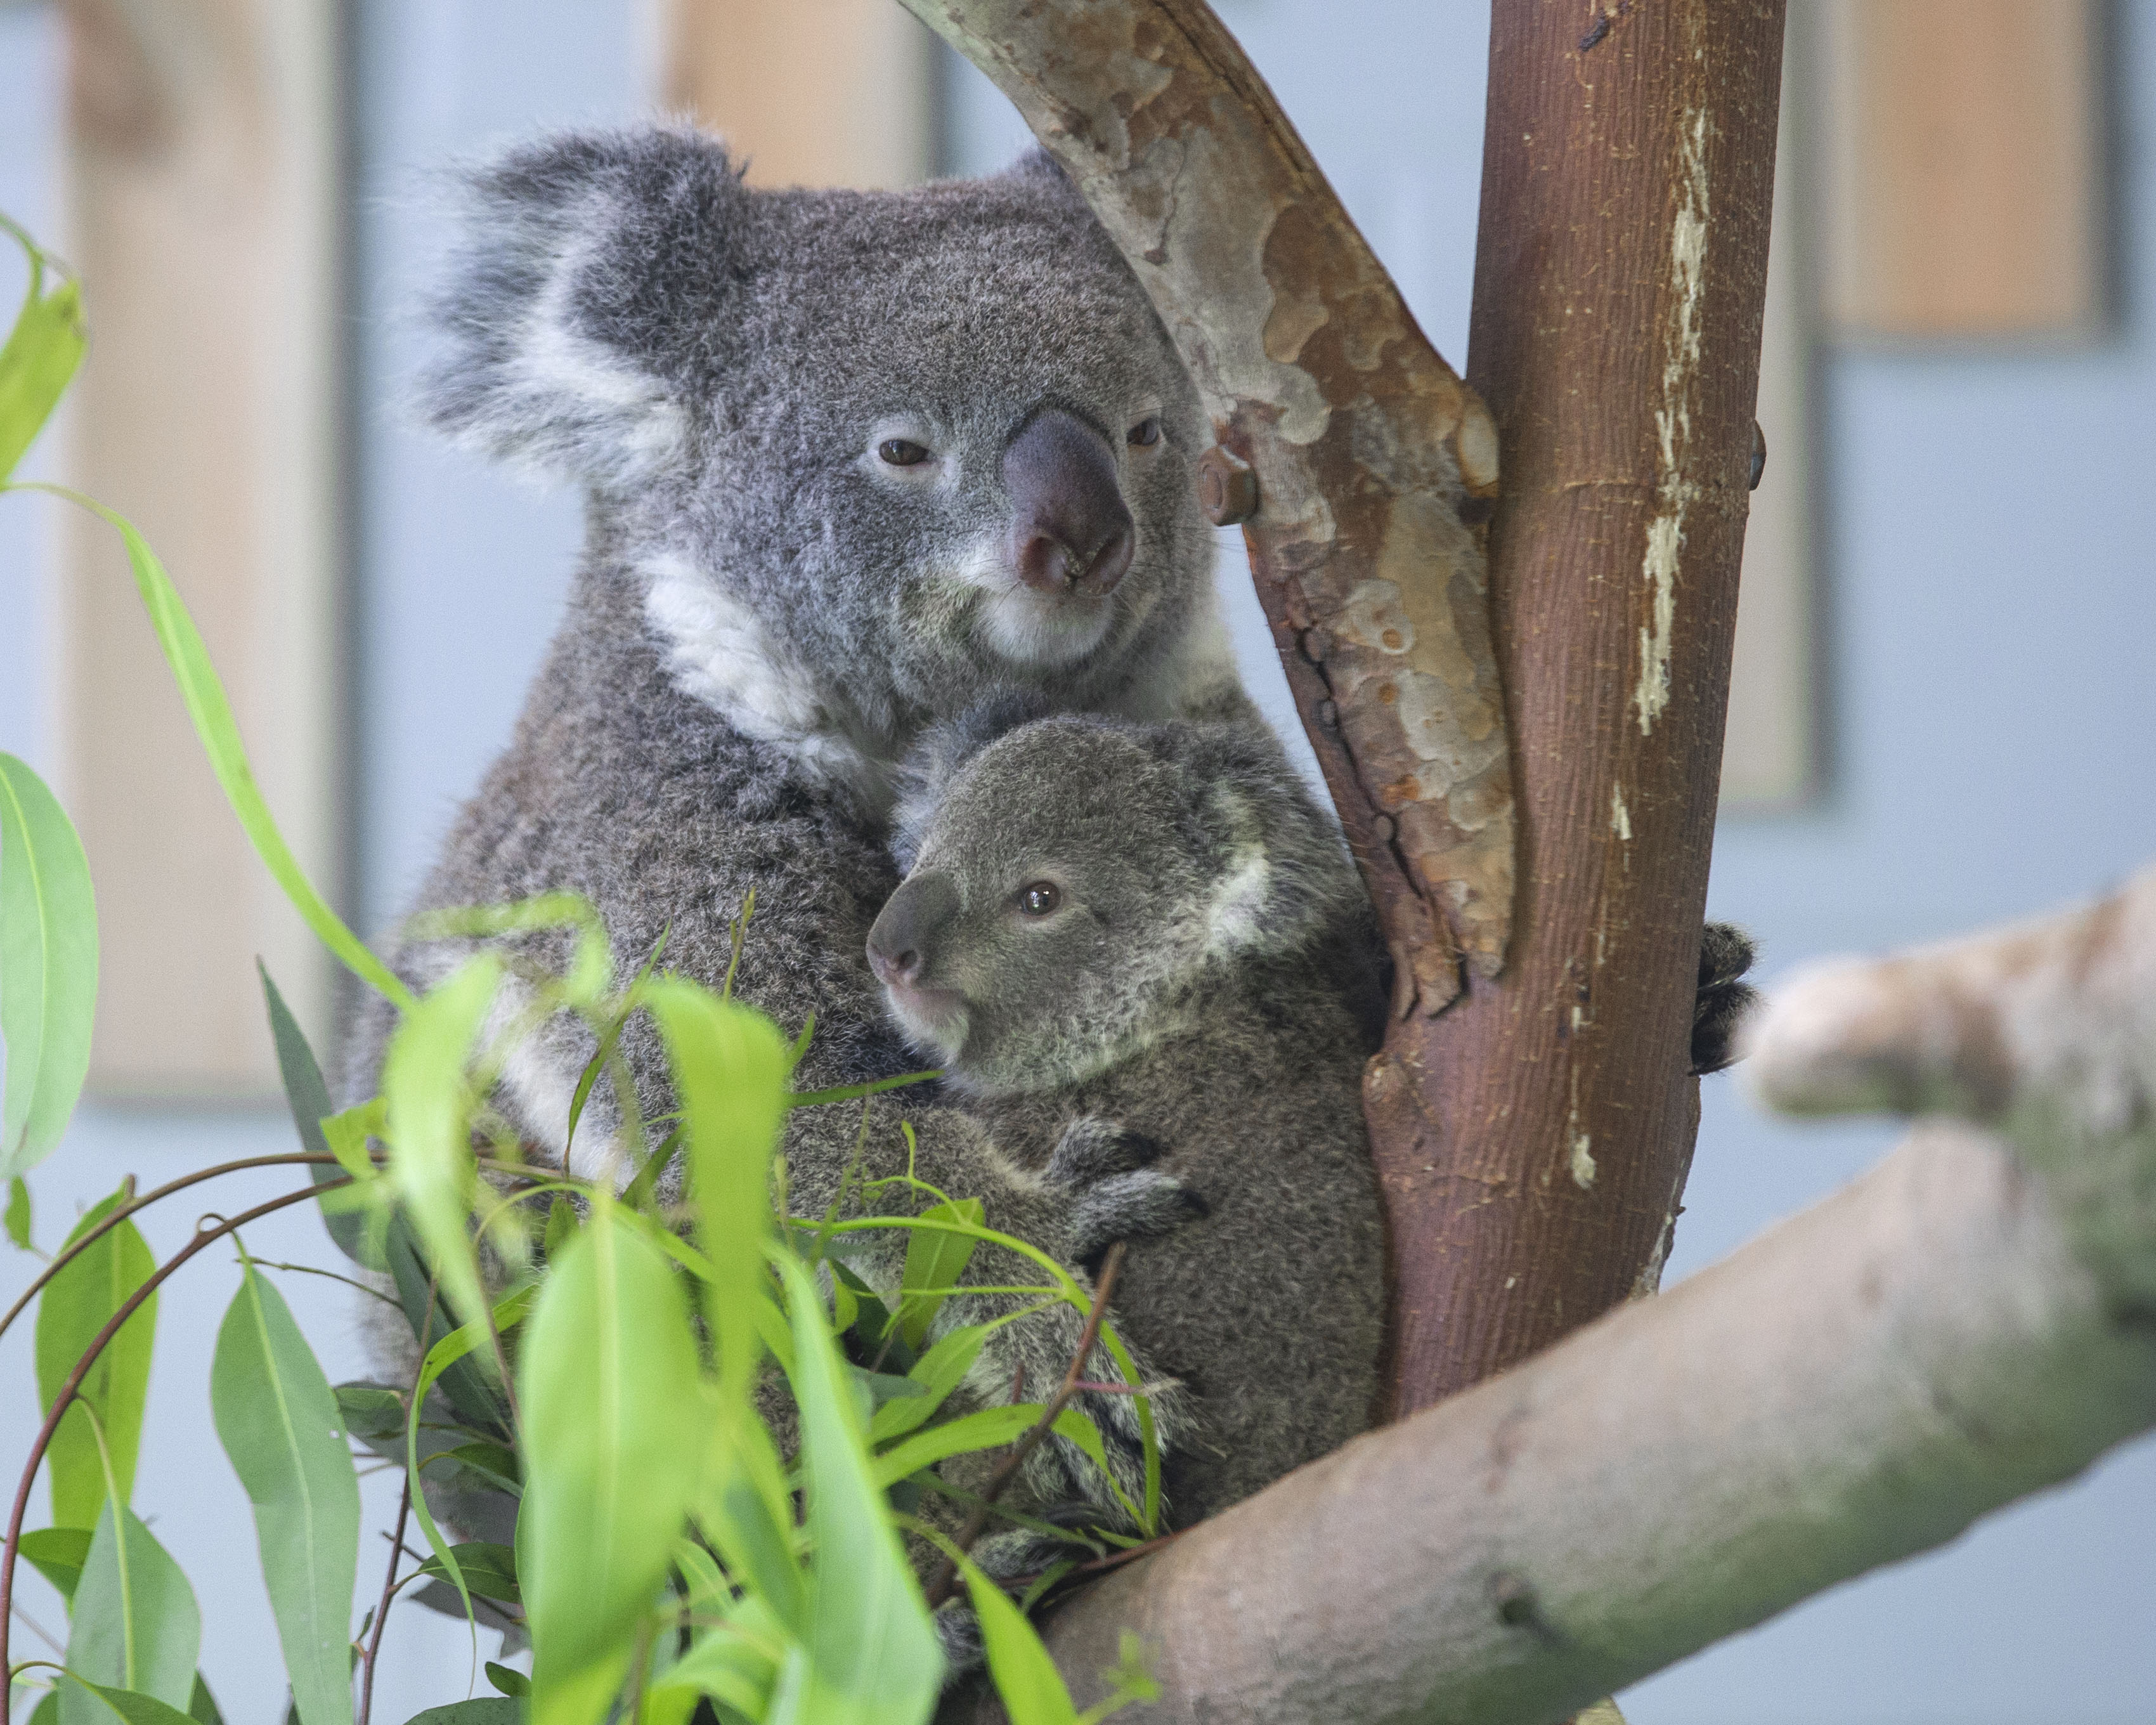 Newborn koala meet visitors in Nanjing